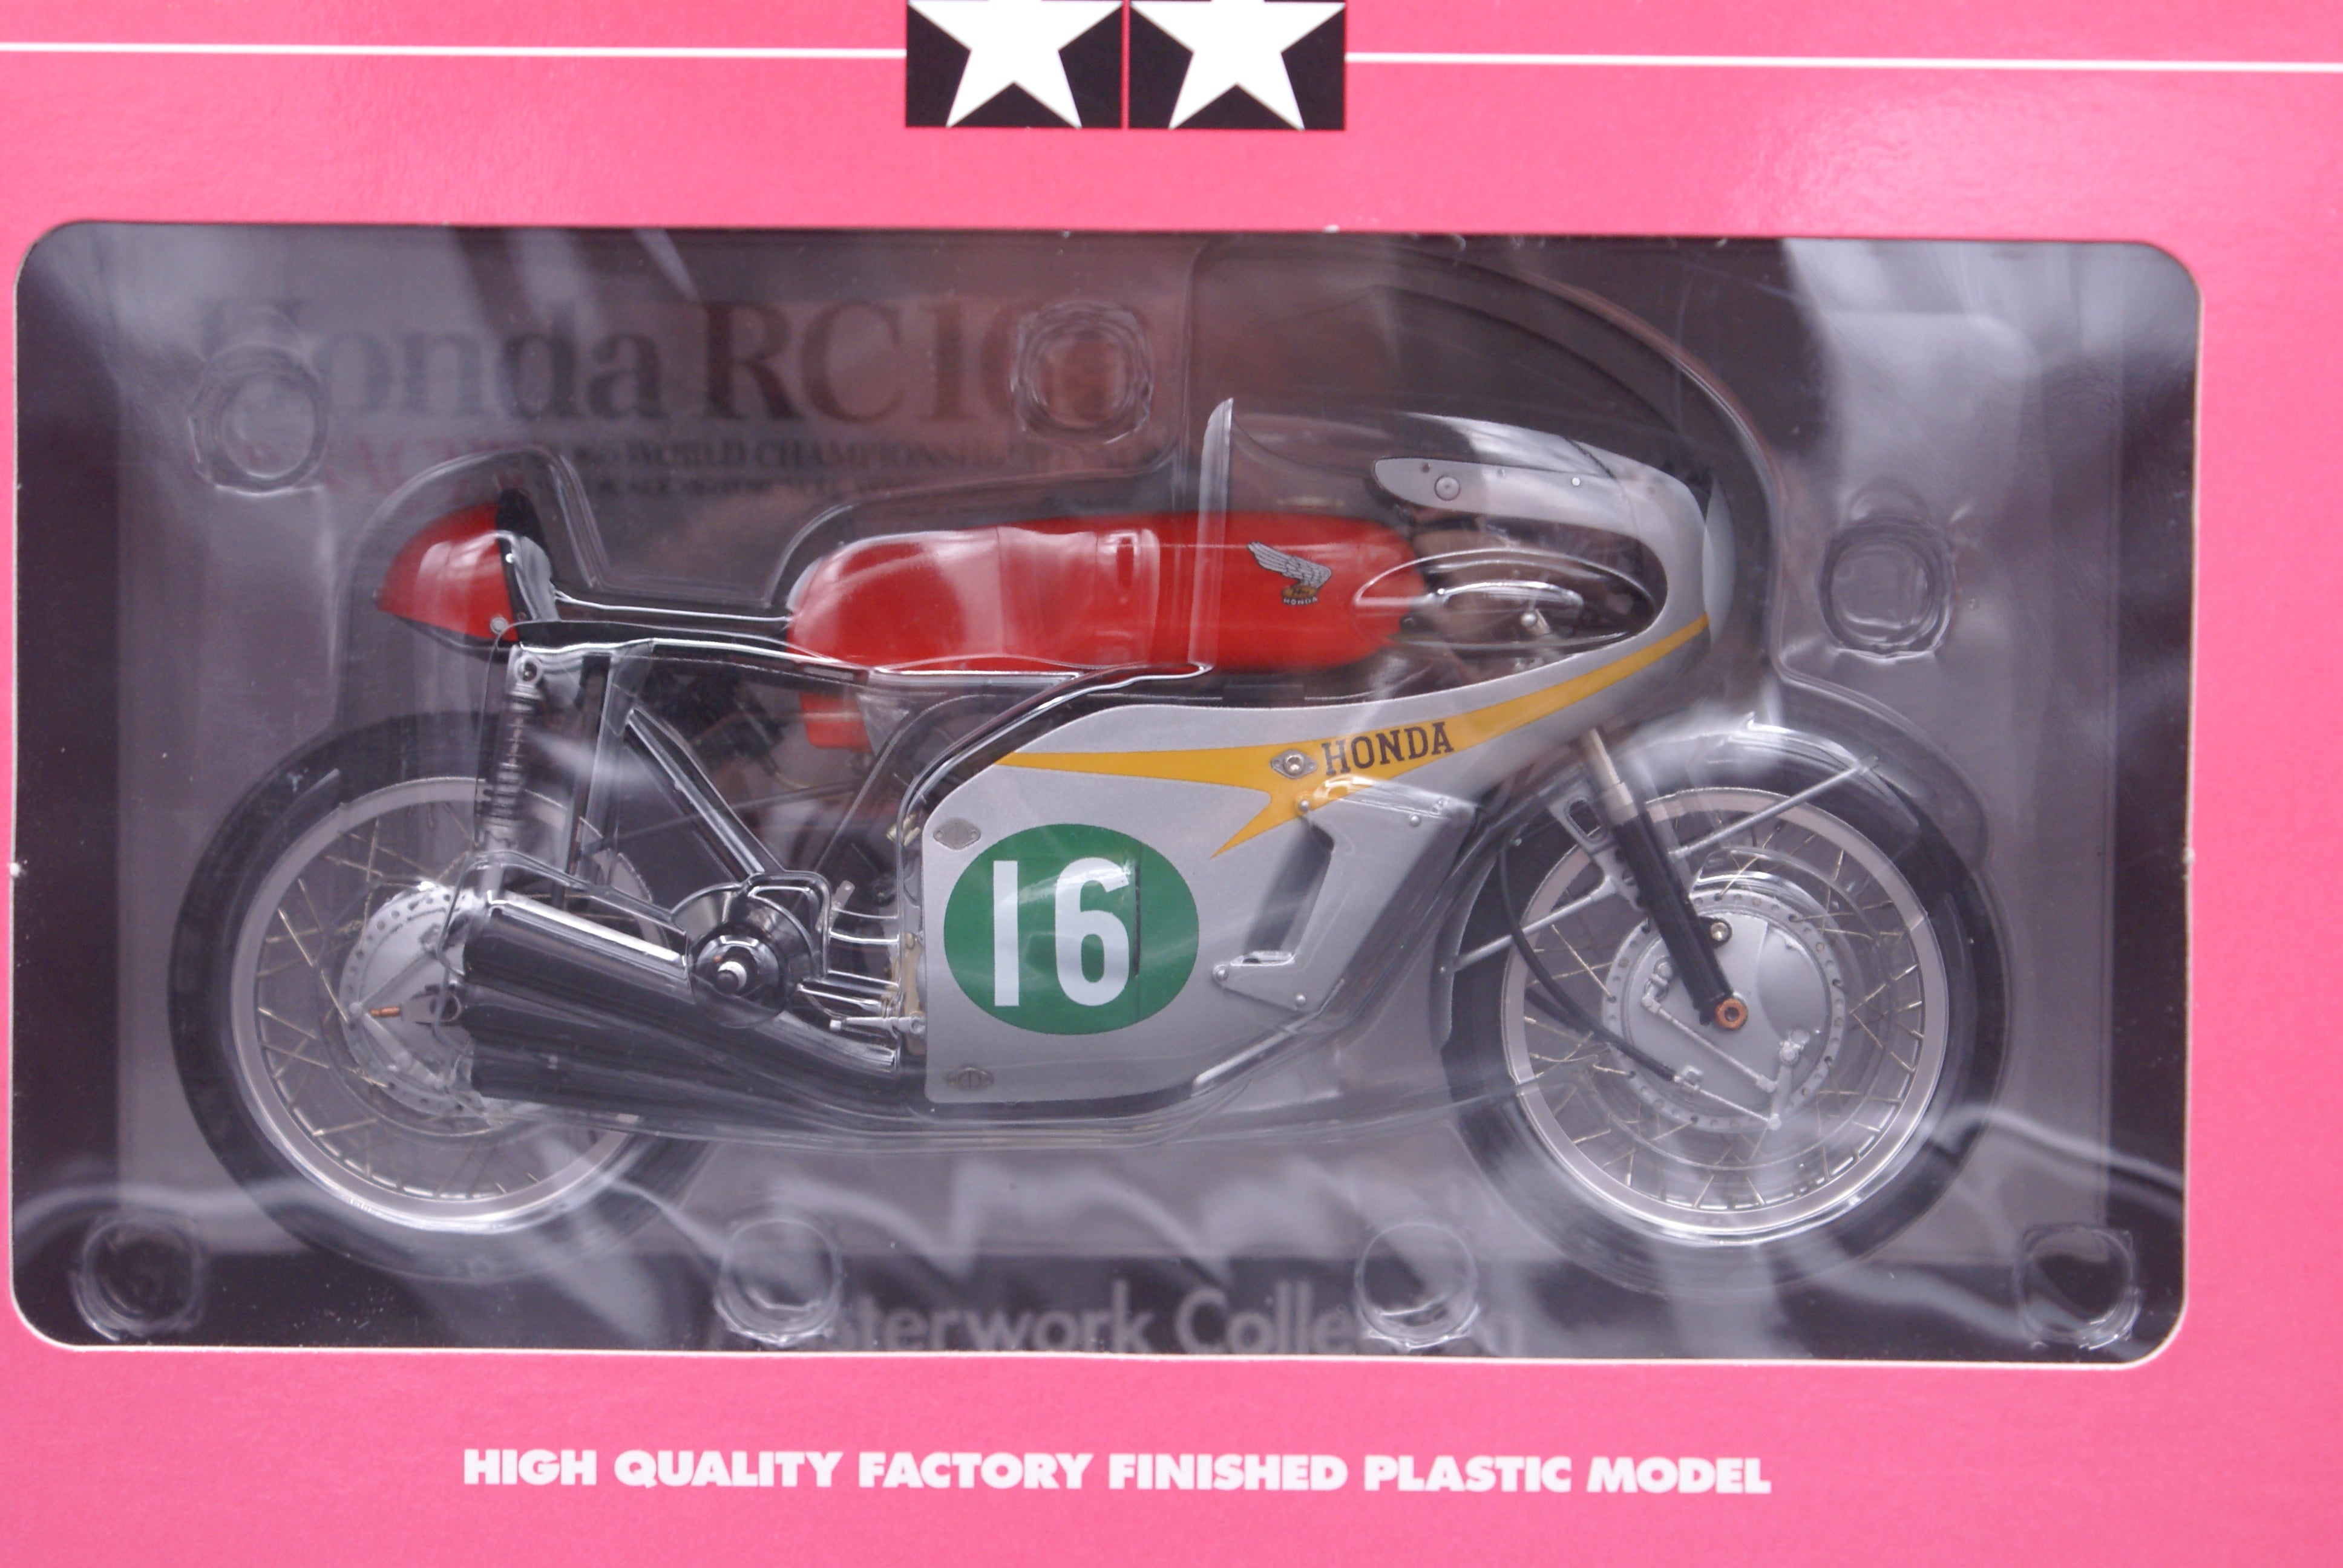 Honda Rc166 Model Dreamcycle Motorcycle Museum